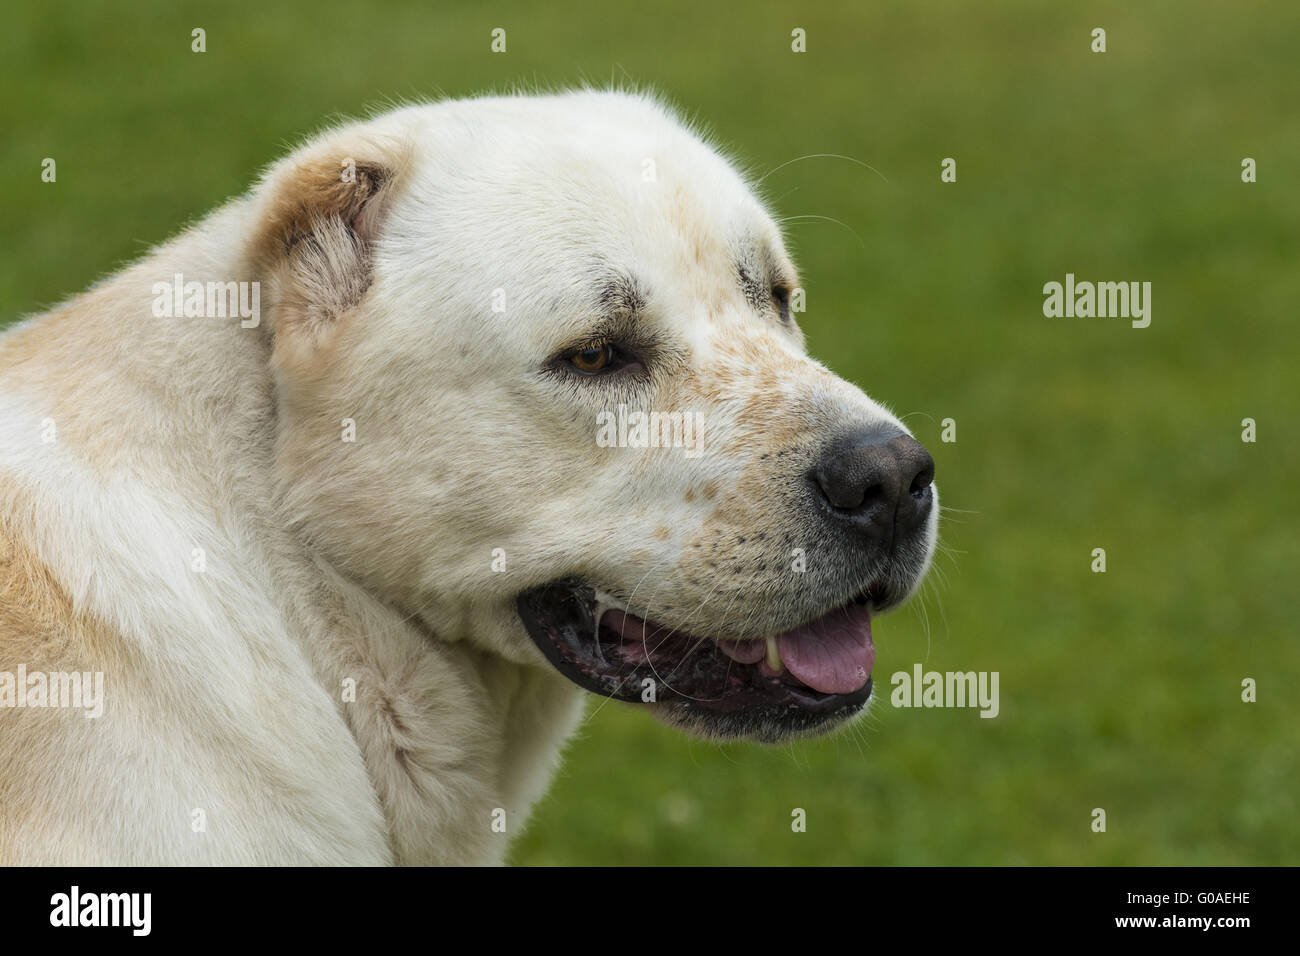 Central Asia Shepherd Dog Stock Photo